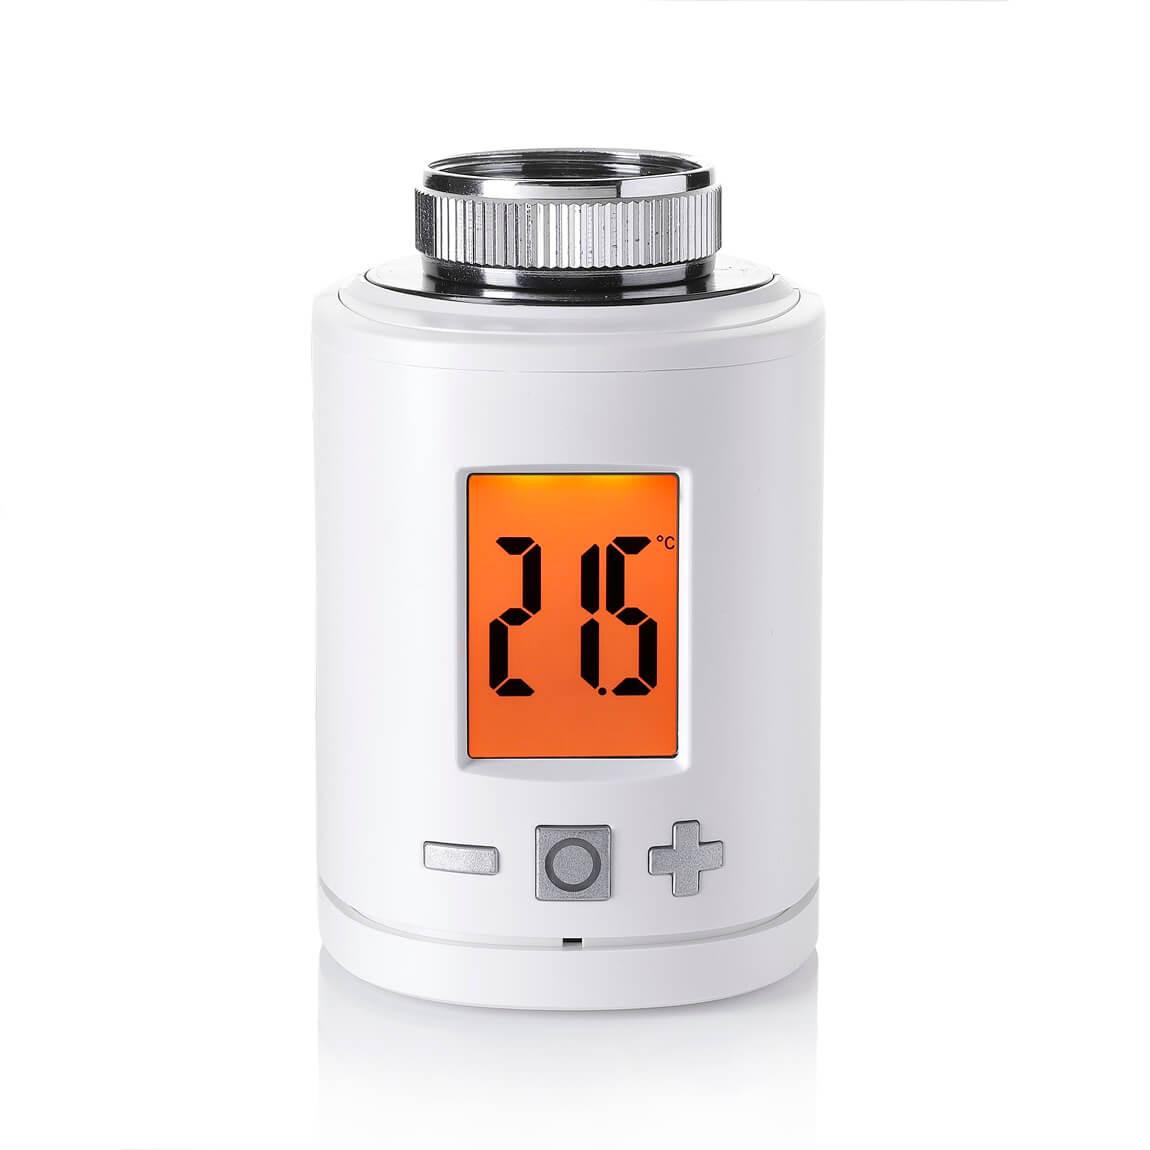 HOMEPILOT Gateway Premium + Heizkörper-Thermostat smart 6er-Set